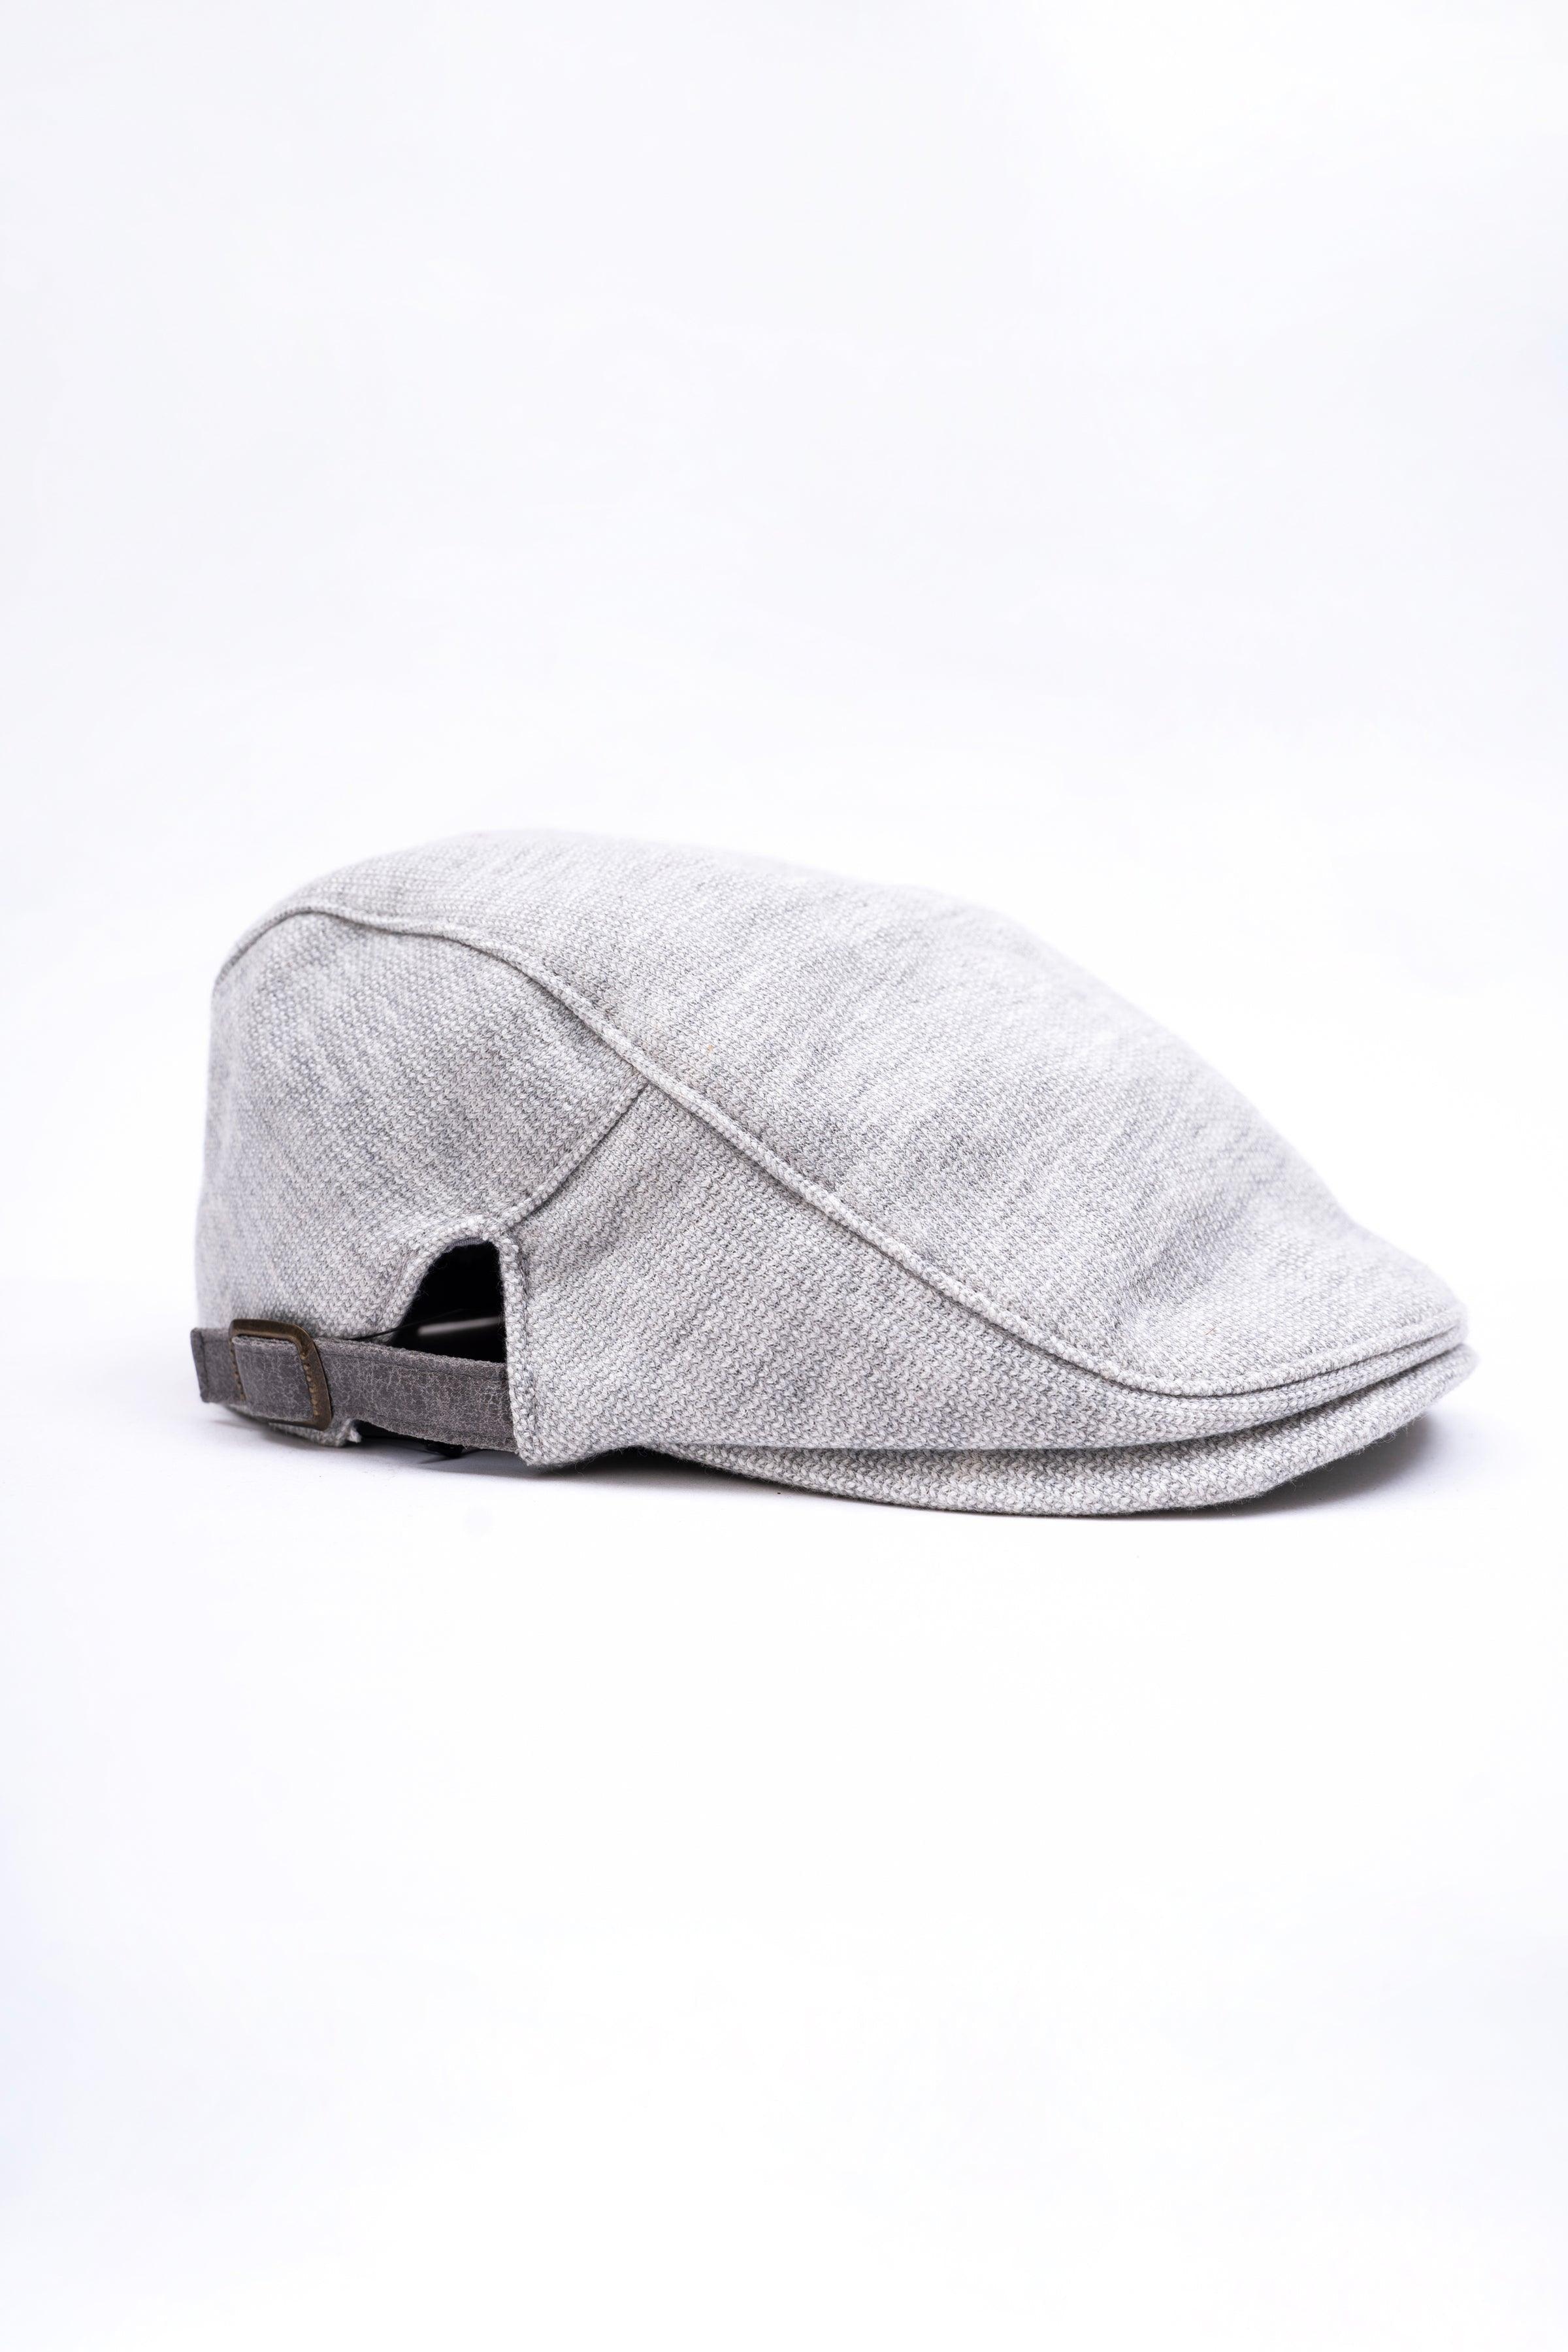 GOLF CAP at Charcoal Clothing